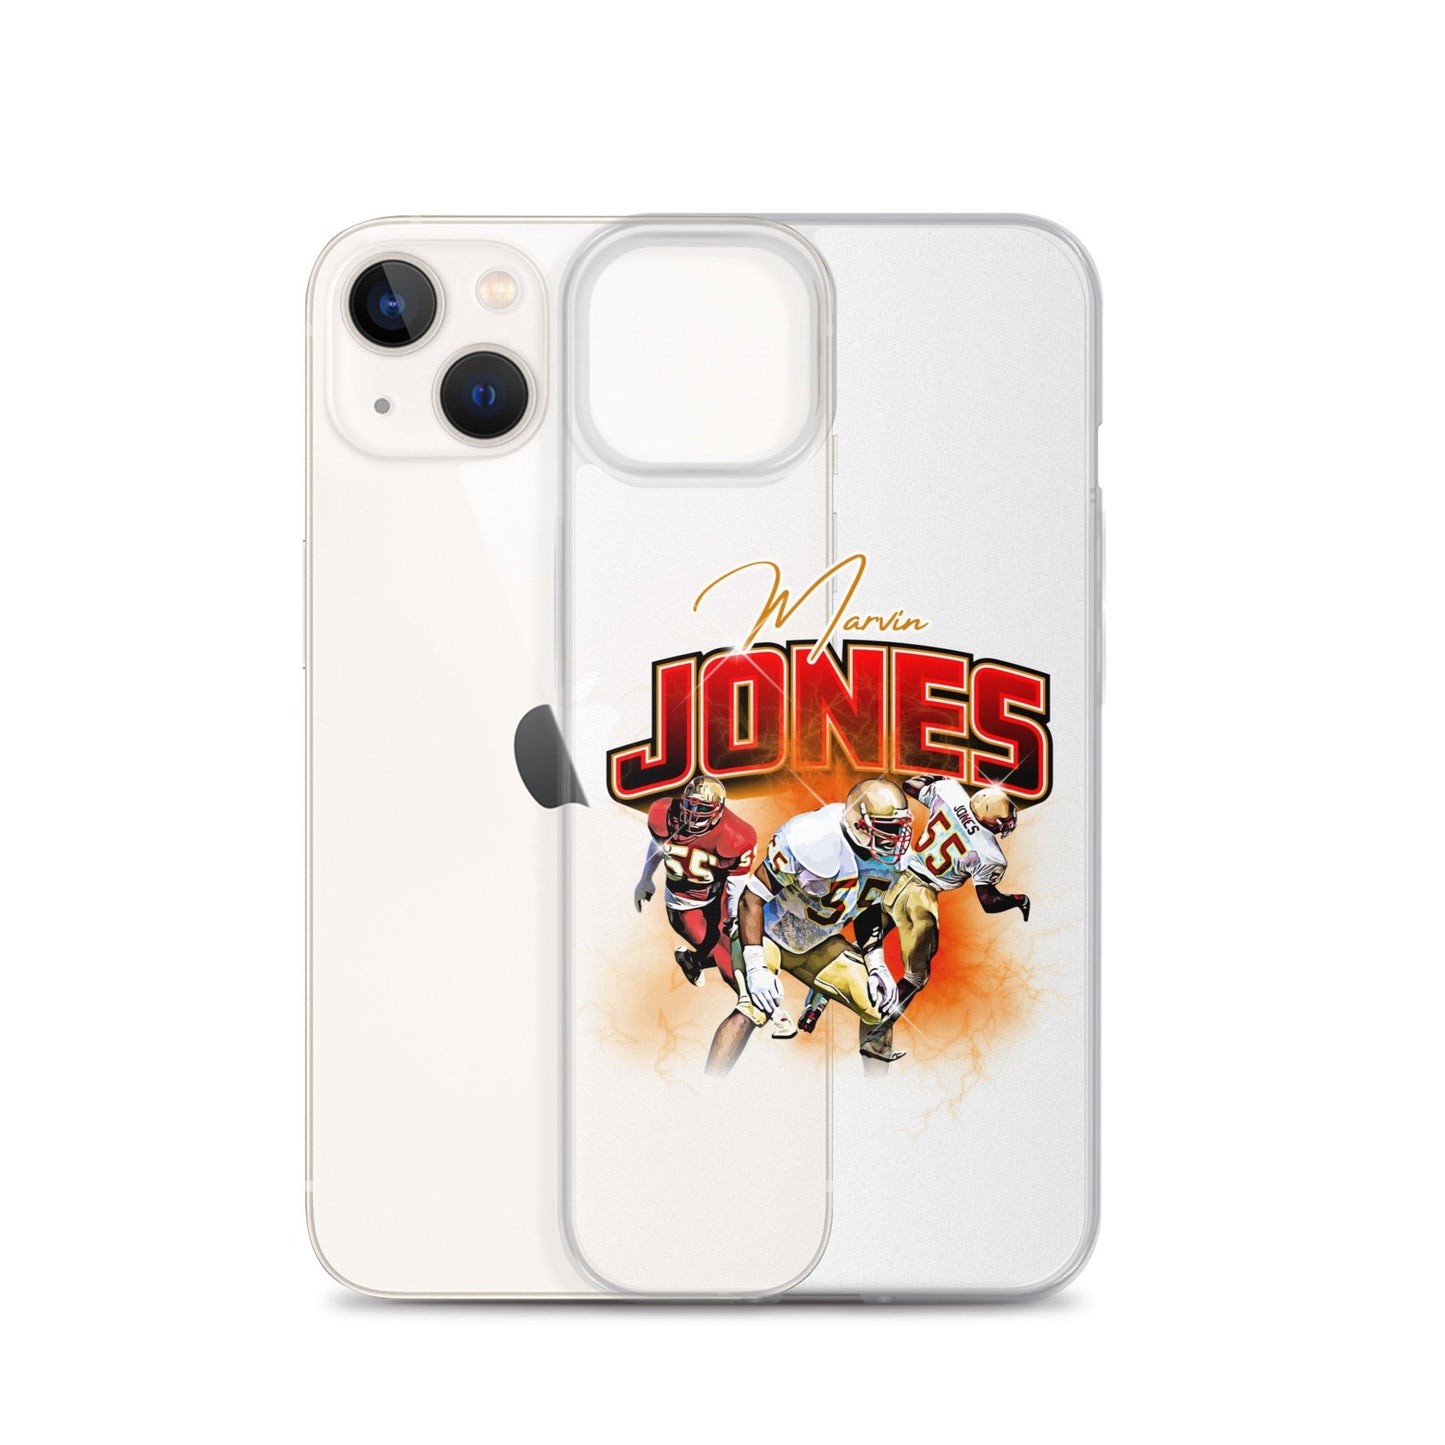 Marvin Jones "Vintage" iPhone Case - Fan Arch